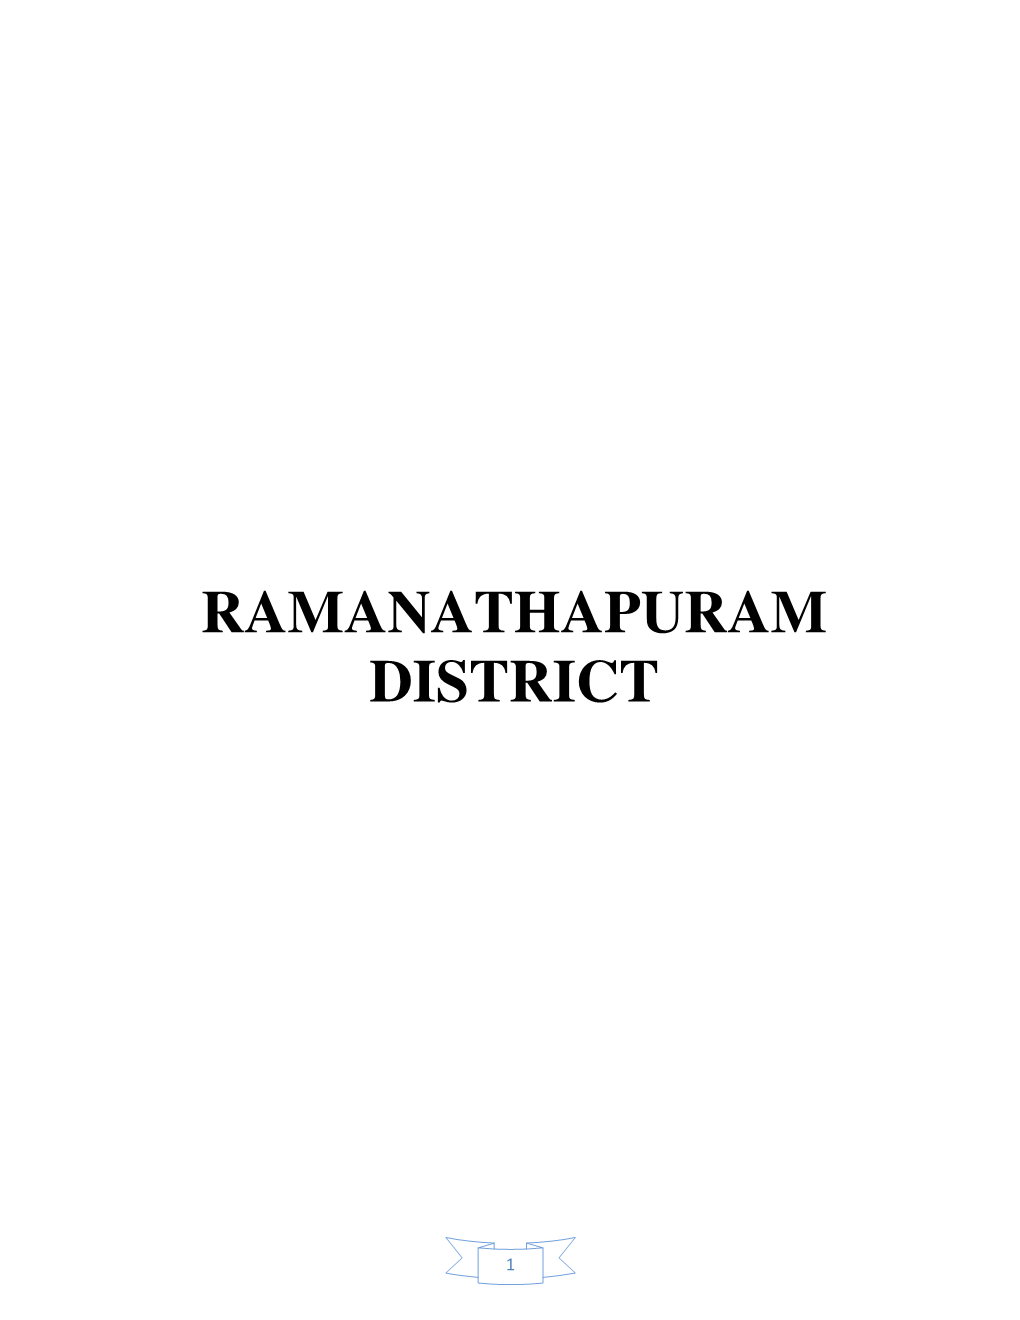 Ramanathapuram District